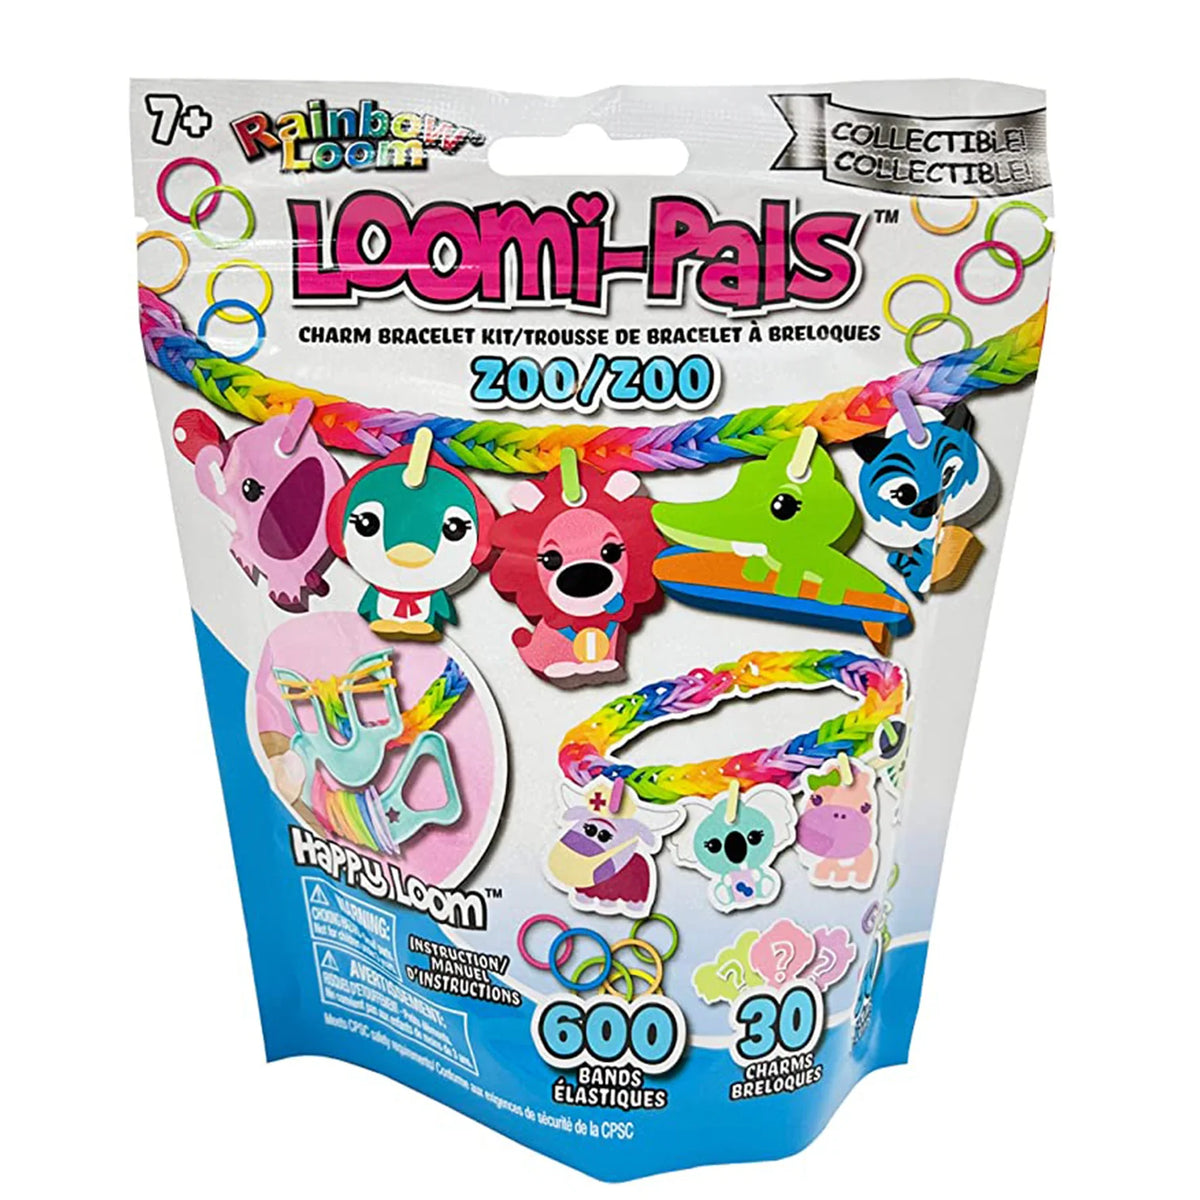 Loomi-Pals Charm Bracelet Kit Cover